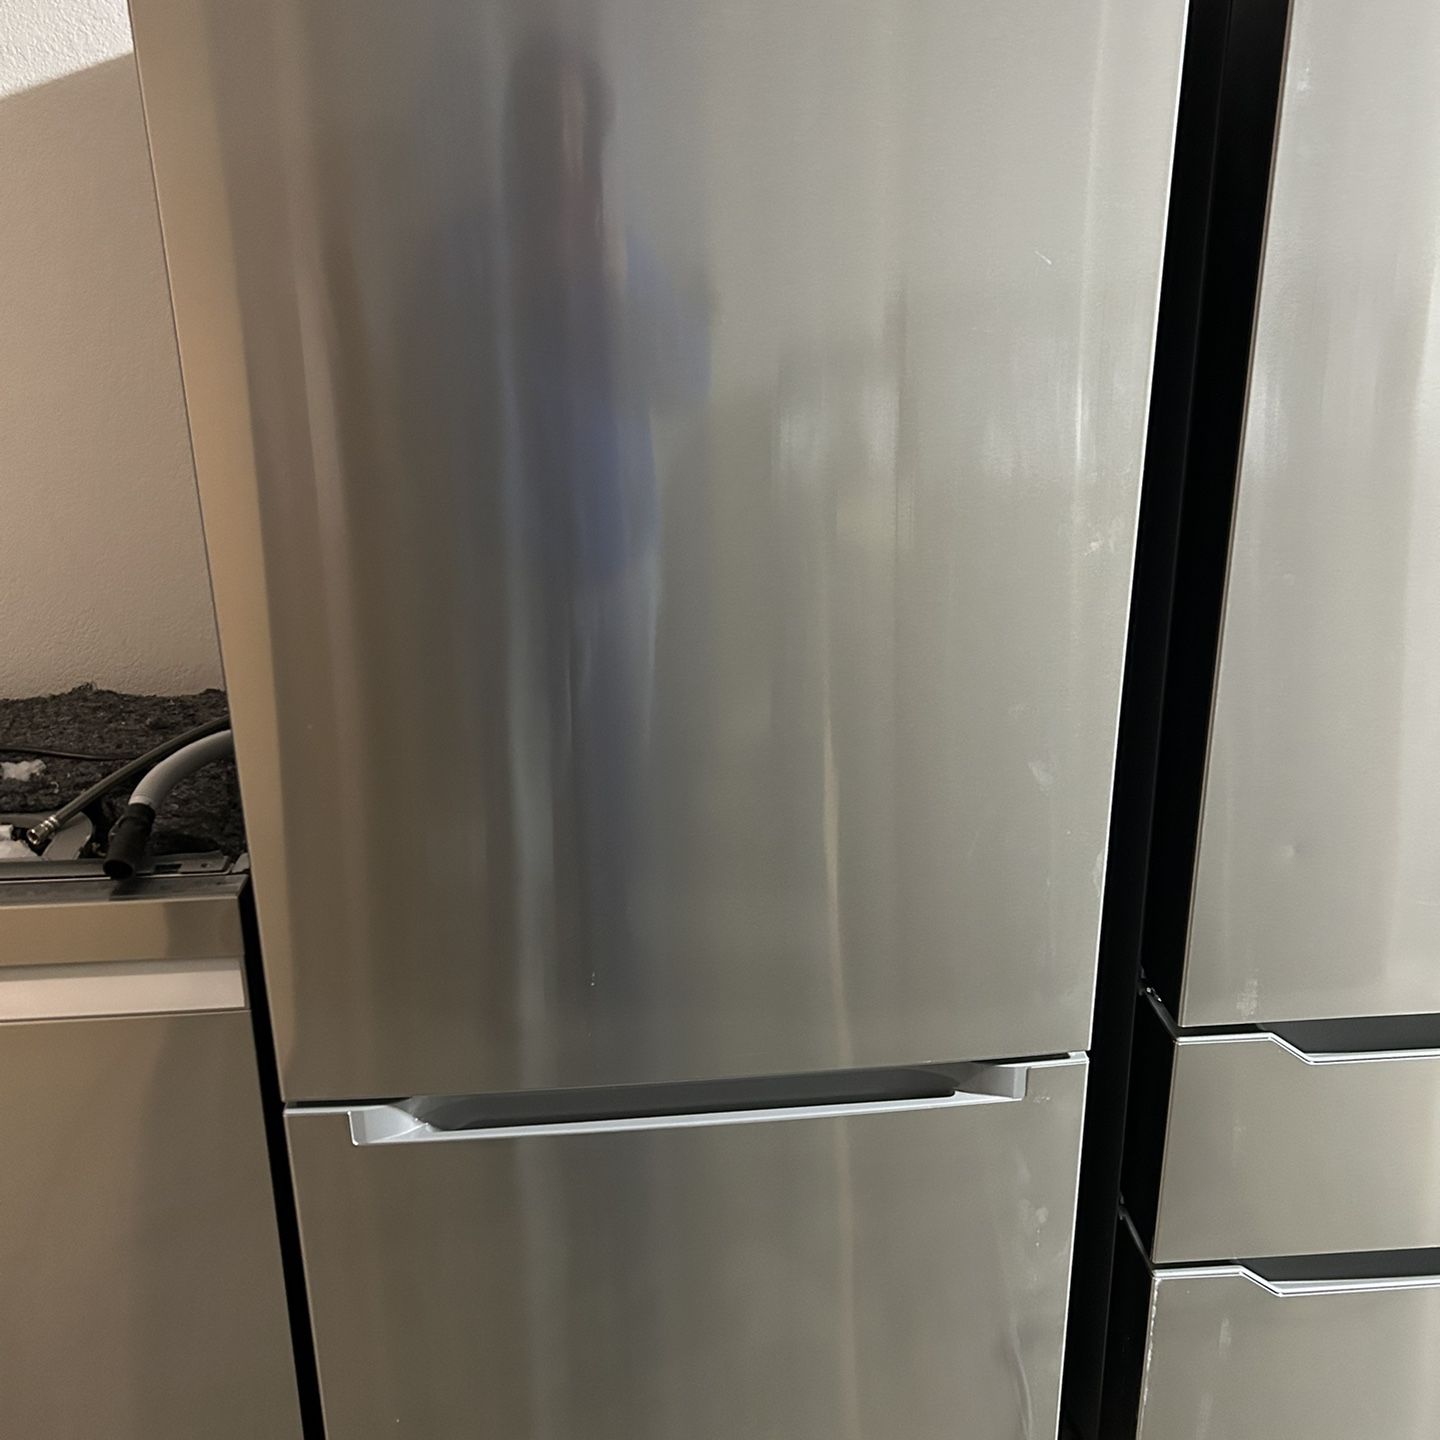 Midea 18.7-cu ft Bottom-Freezer Refrigerator (Stainless Steel) ENERGY STAR